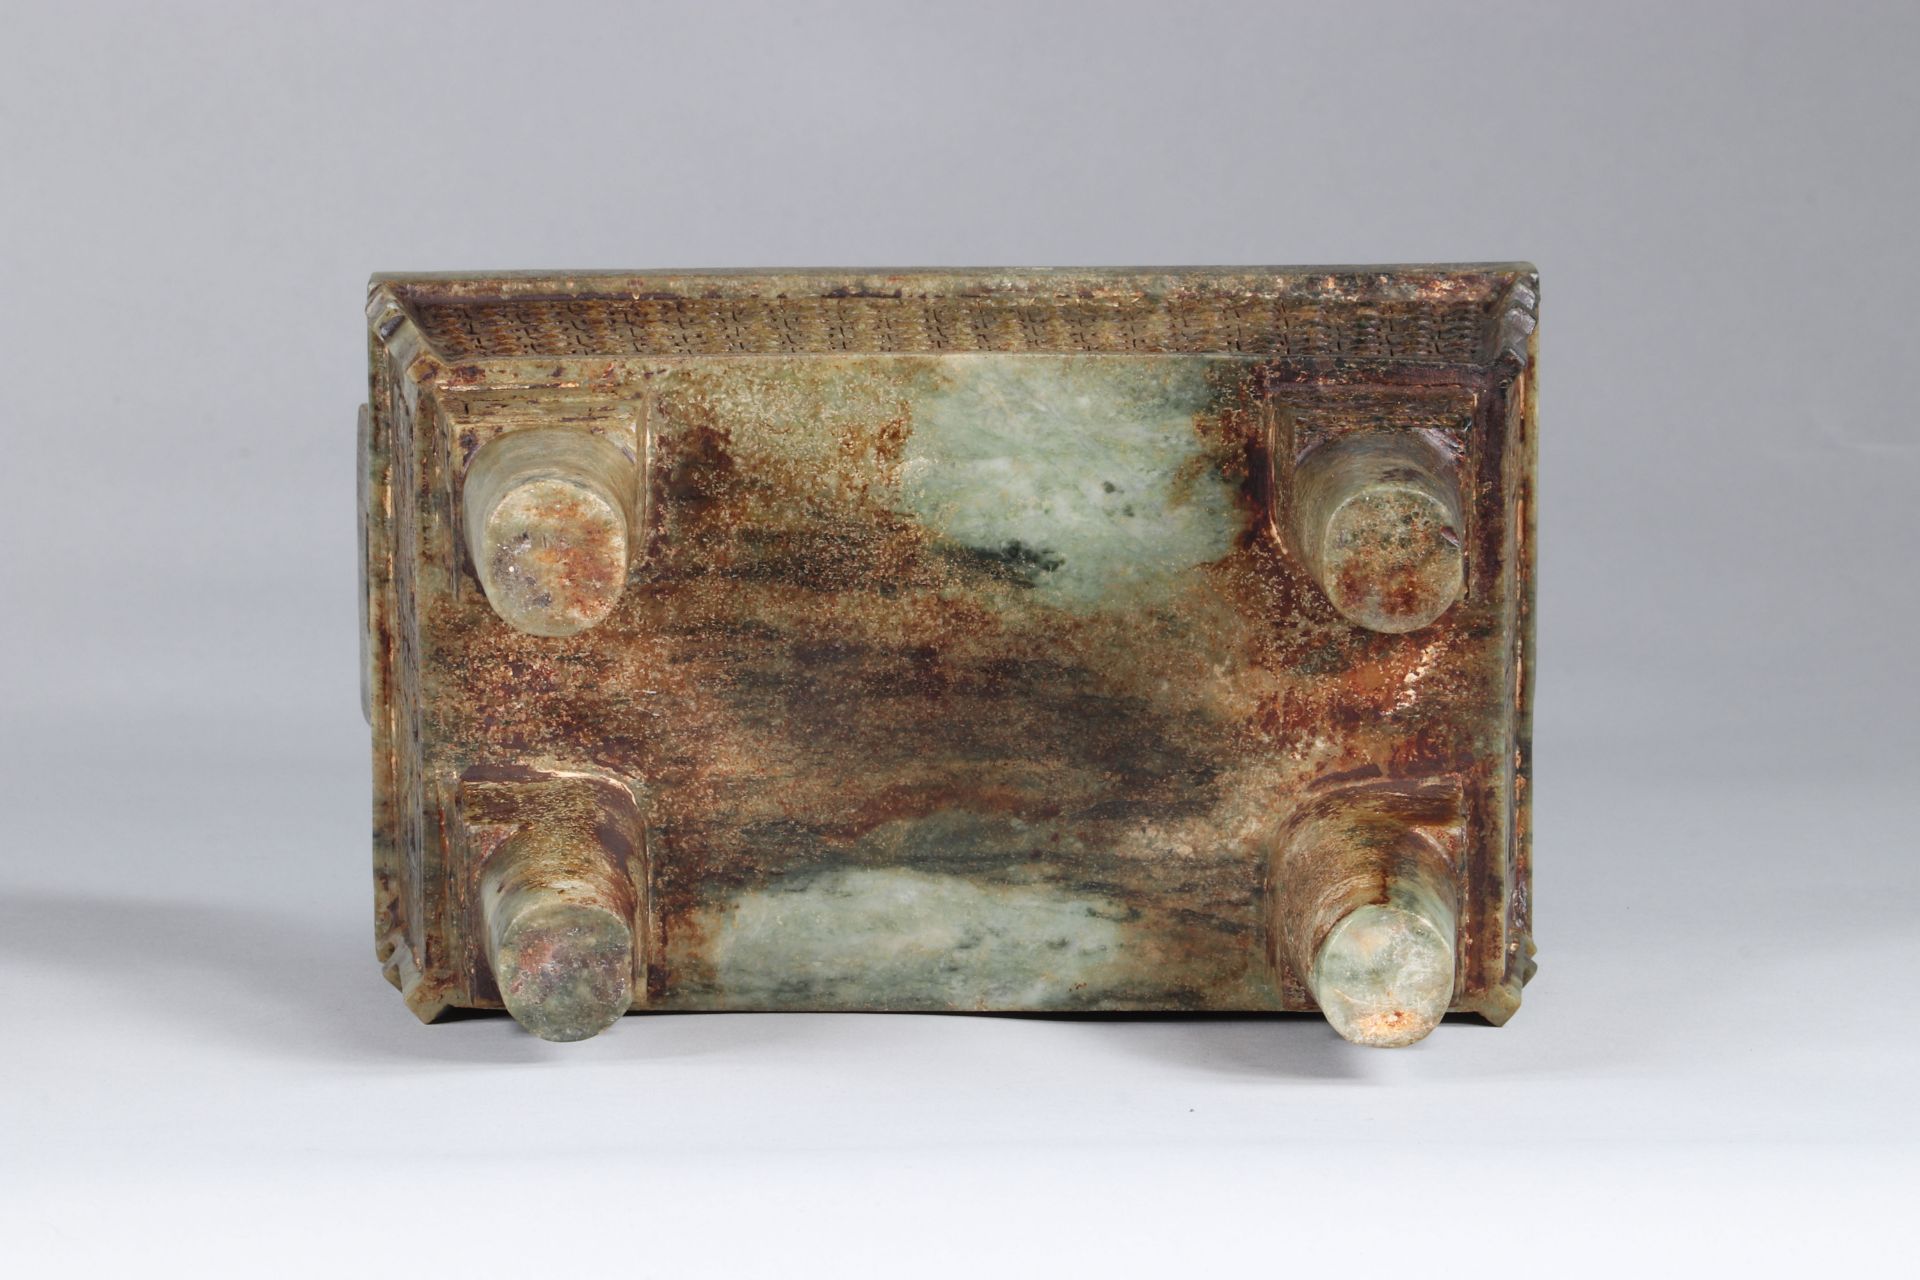 China archaic ritual vessel, called: -Fang Deng- made of jade burns perfume - Image 6 of 7